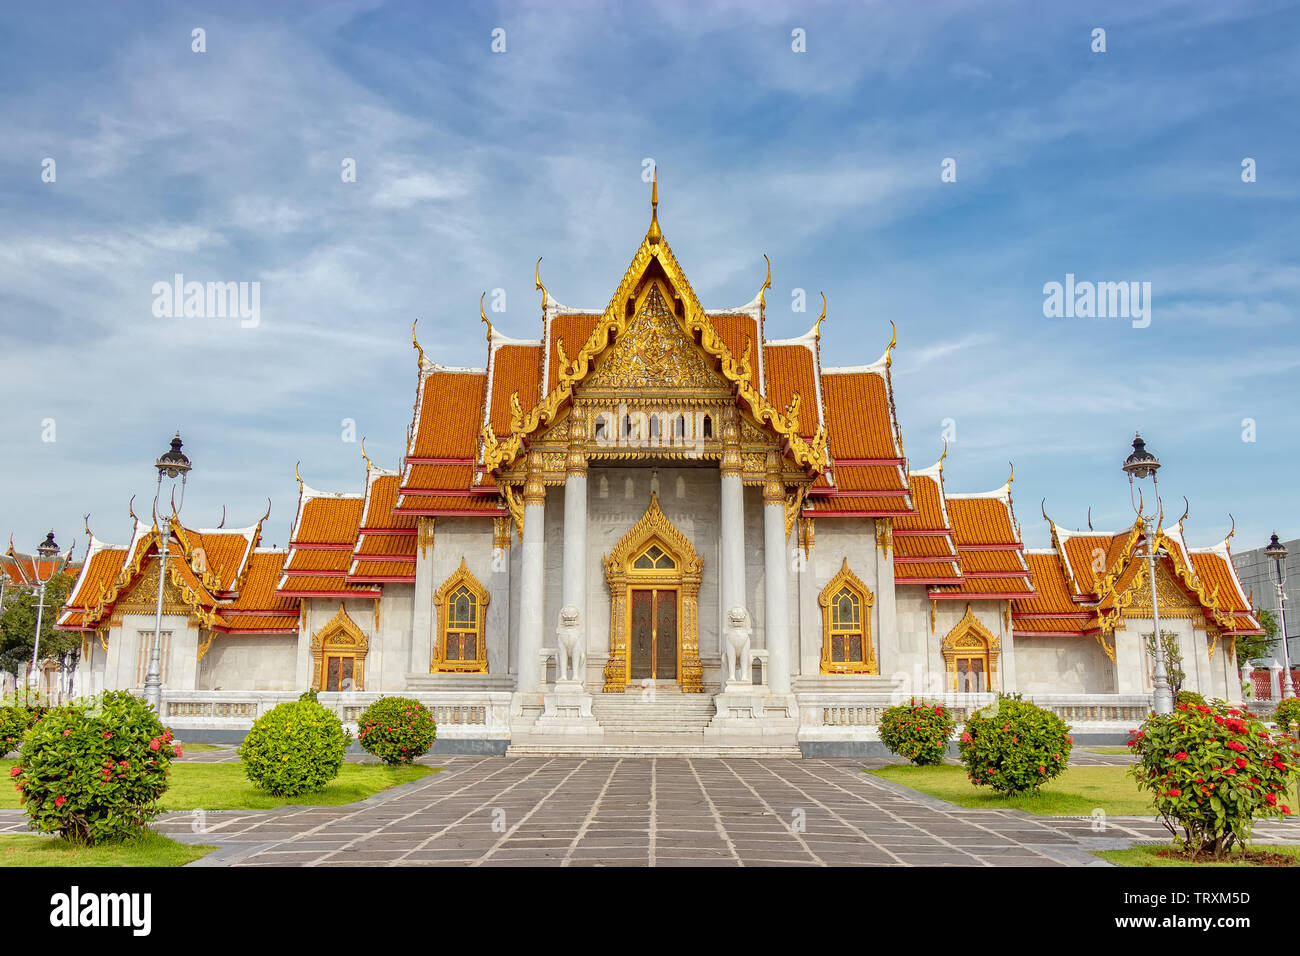 Il tempio in marmo, Wat Benchamabophit Dusitvanaram Bangkok in Thailandia con il cielo blu a sfondo Foto Stock